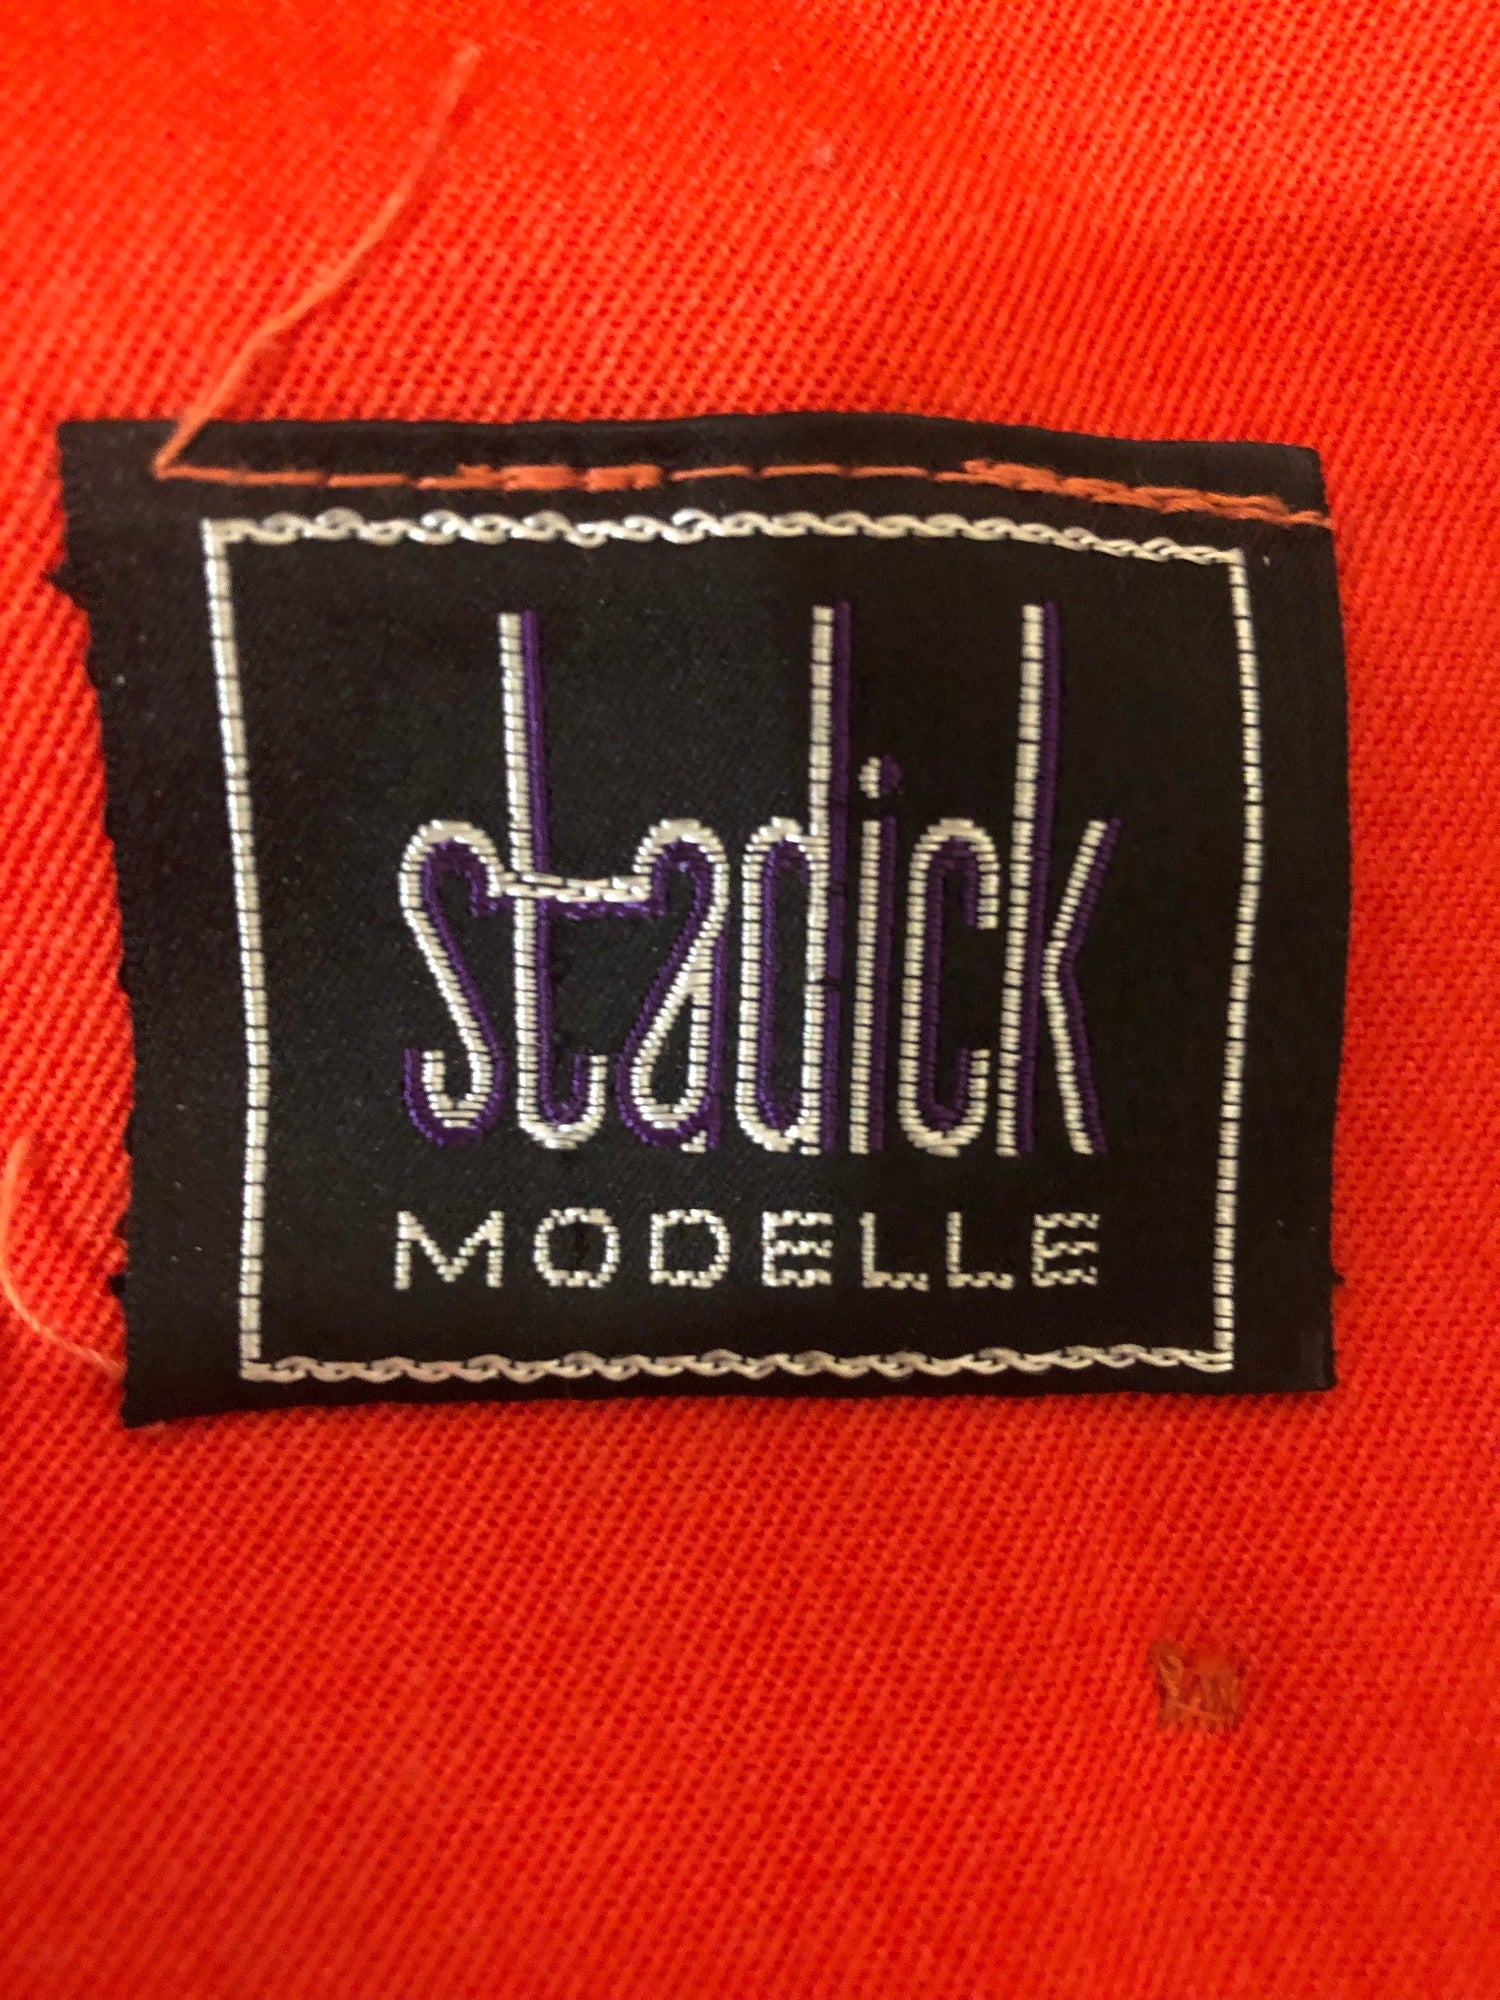 womens  white stitch  vintage  Urban Village Vintage  stitch detailing  Stadicke Modelle  red  lightweight jacket  Jacket  diamond stitch  cropped  collar  coat  Beagle collar  Act III  70s  70  1970s  10